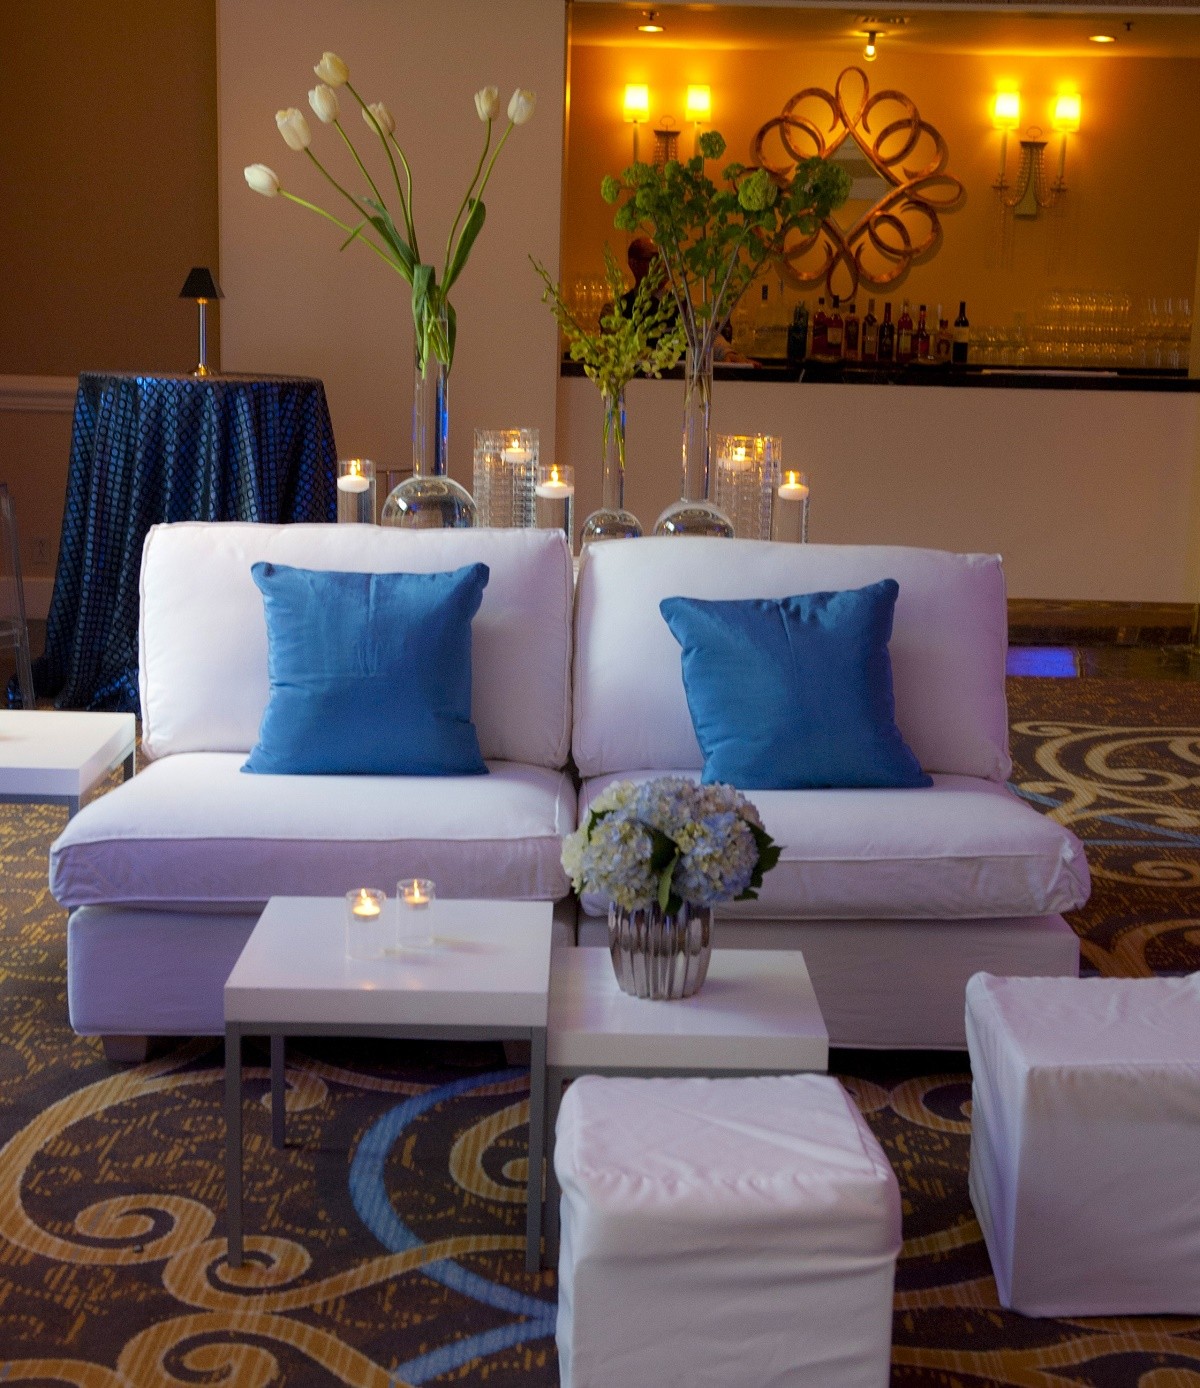 white lounge furniture with blue pillows for cocktail party four seasons hotel philadelphia evantine design